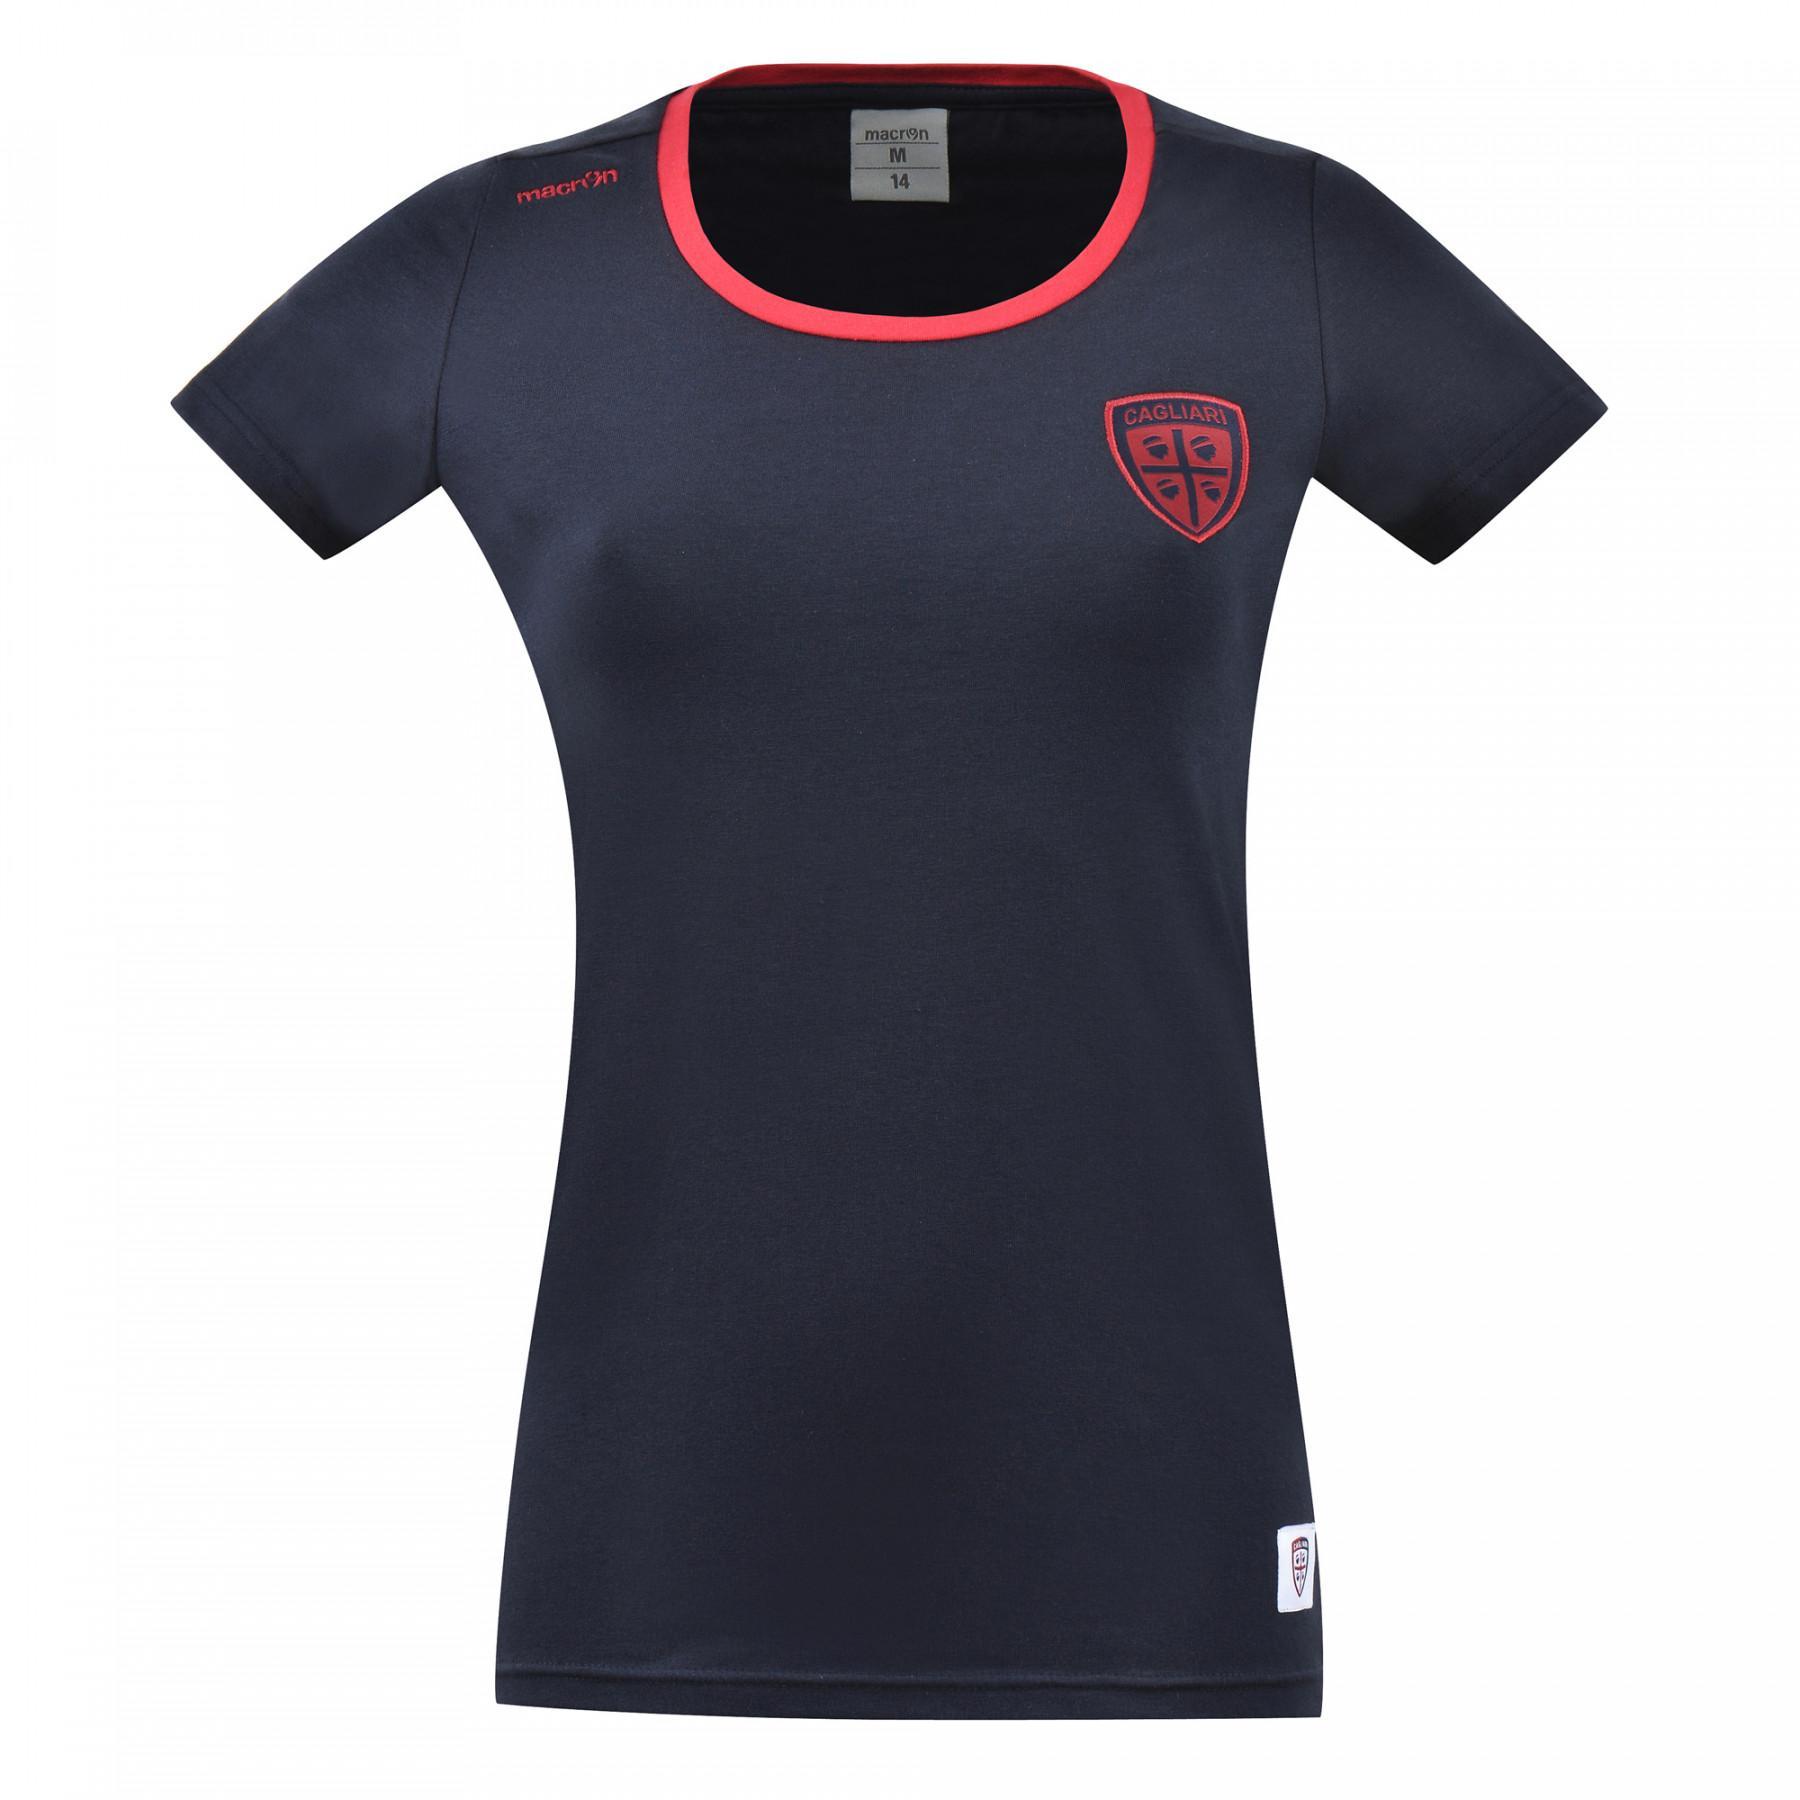 T-shirt femme Cagliari Calcio linea fan